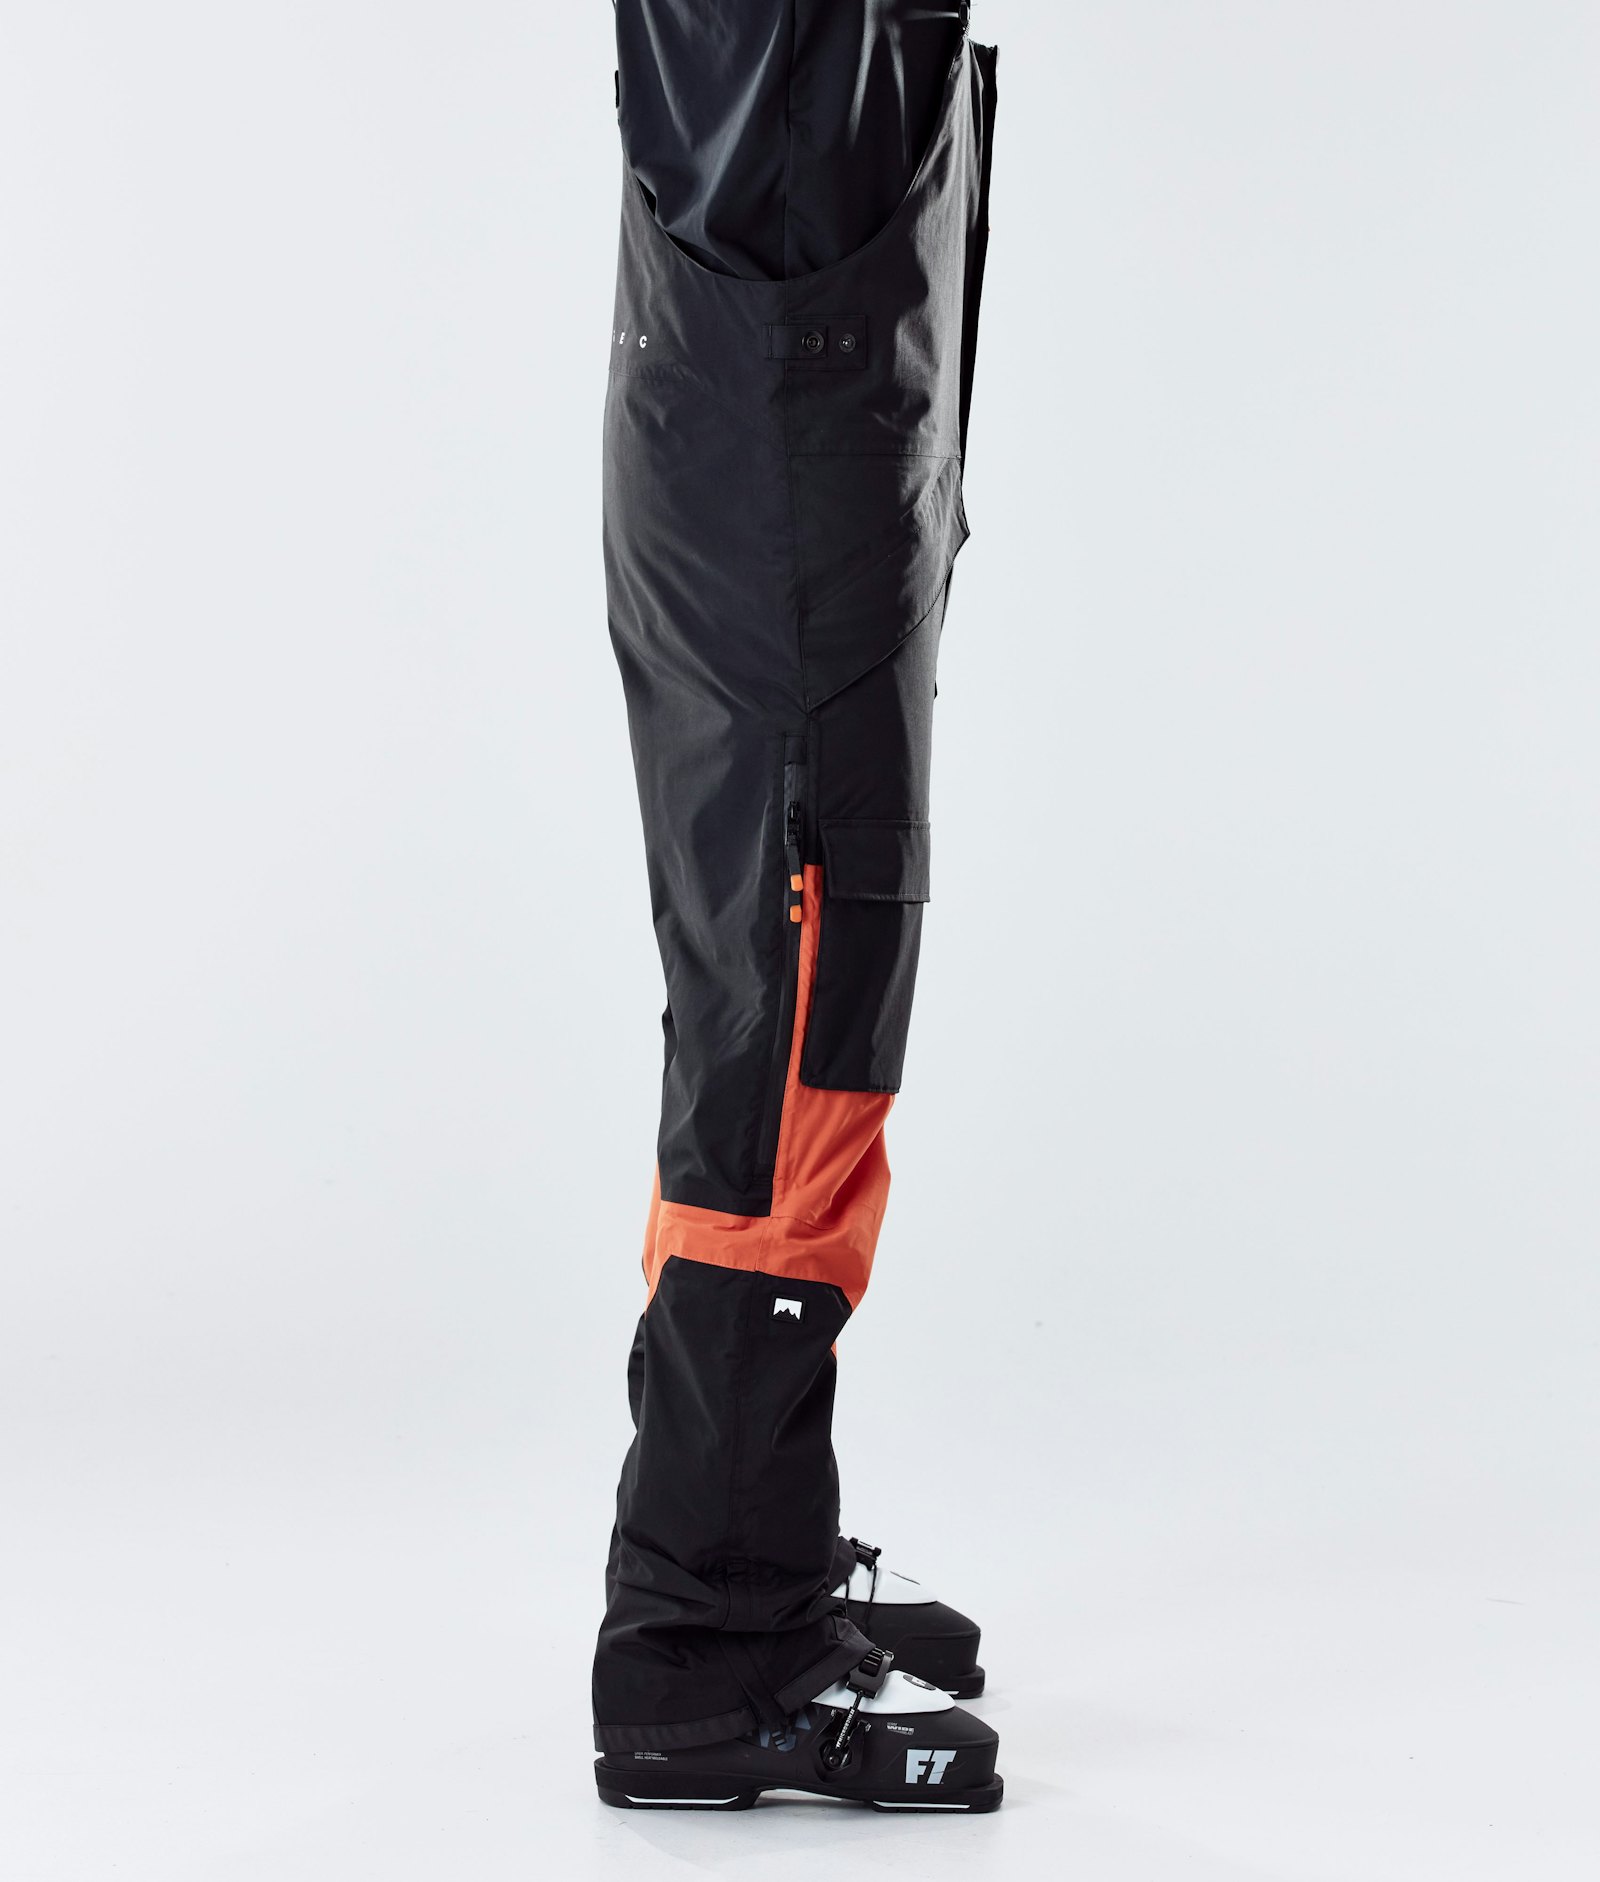 Fawk 2020 Pantalon de Ski Homme Black/Orange